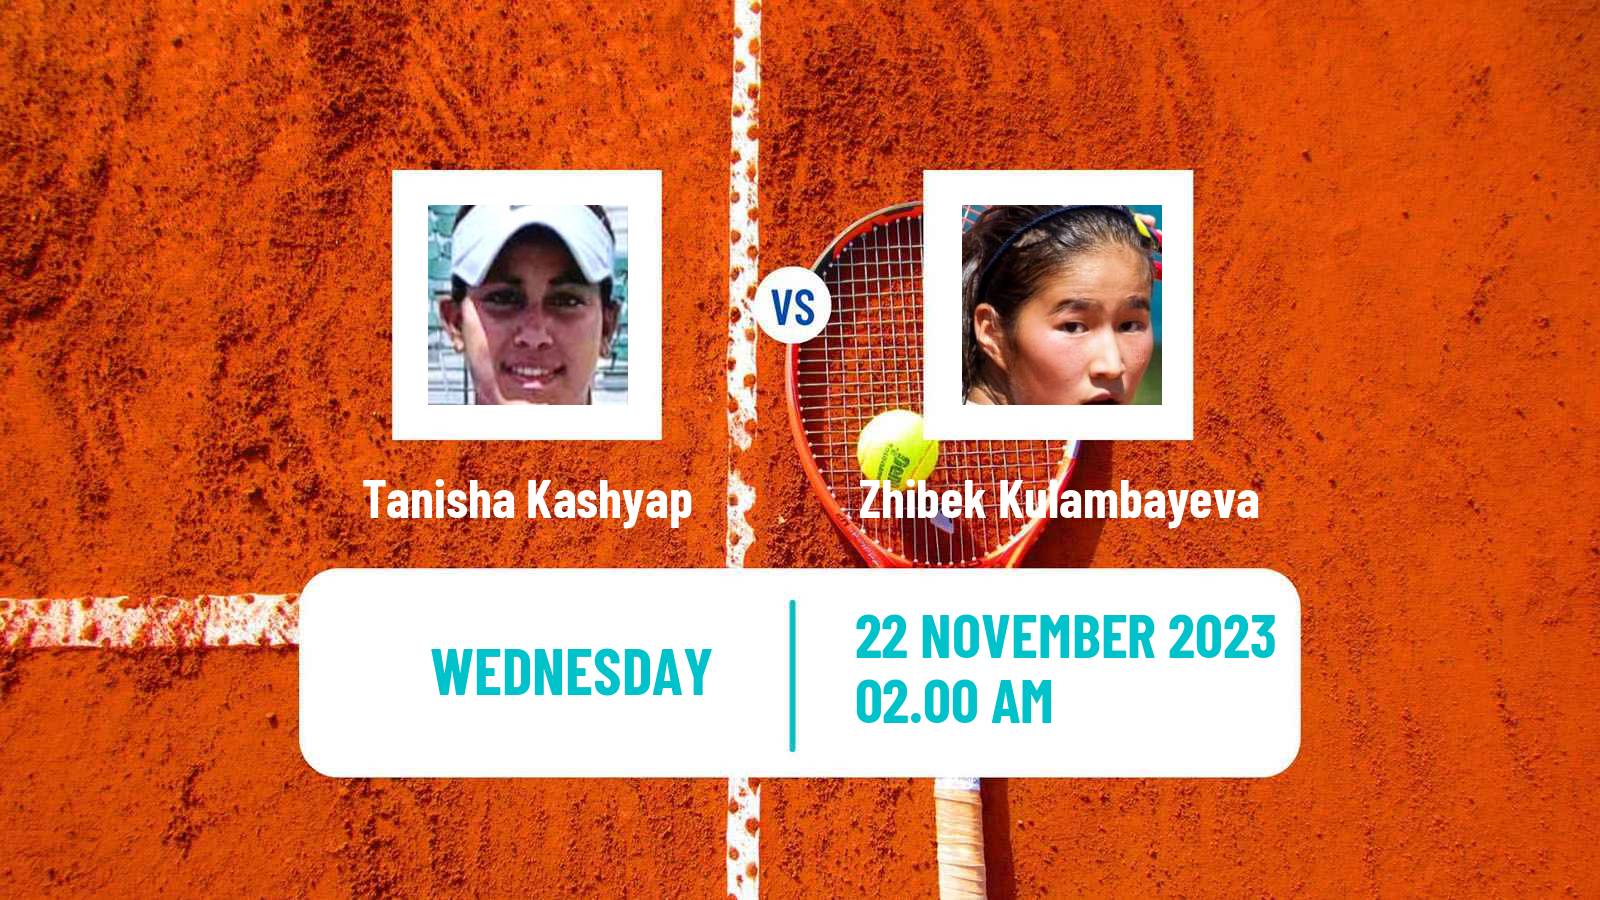 Tennis ITF W25 Bengaluru 2 Women Tanisha Kashyap - Zhibek Kulambayeva